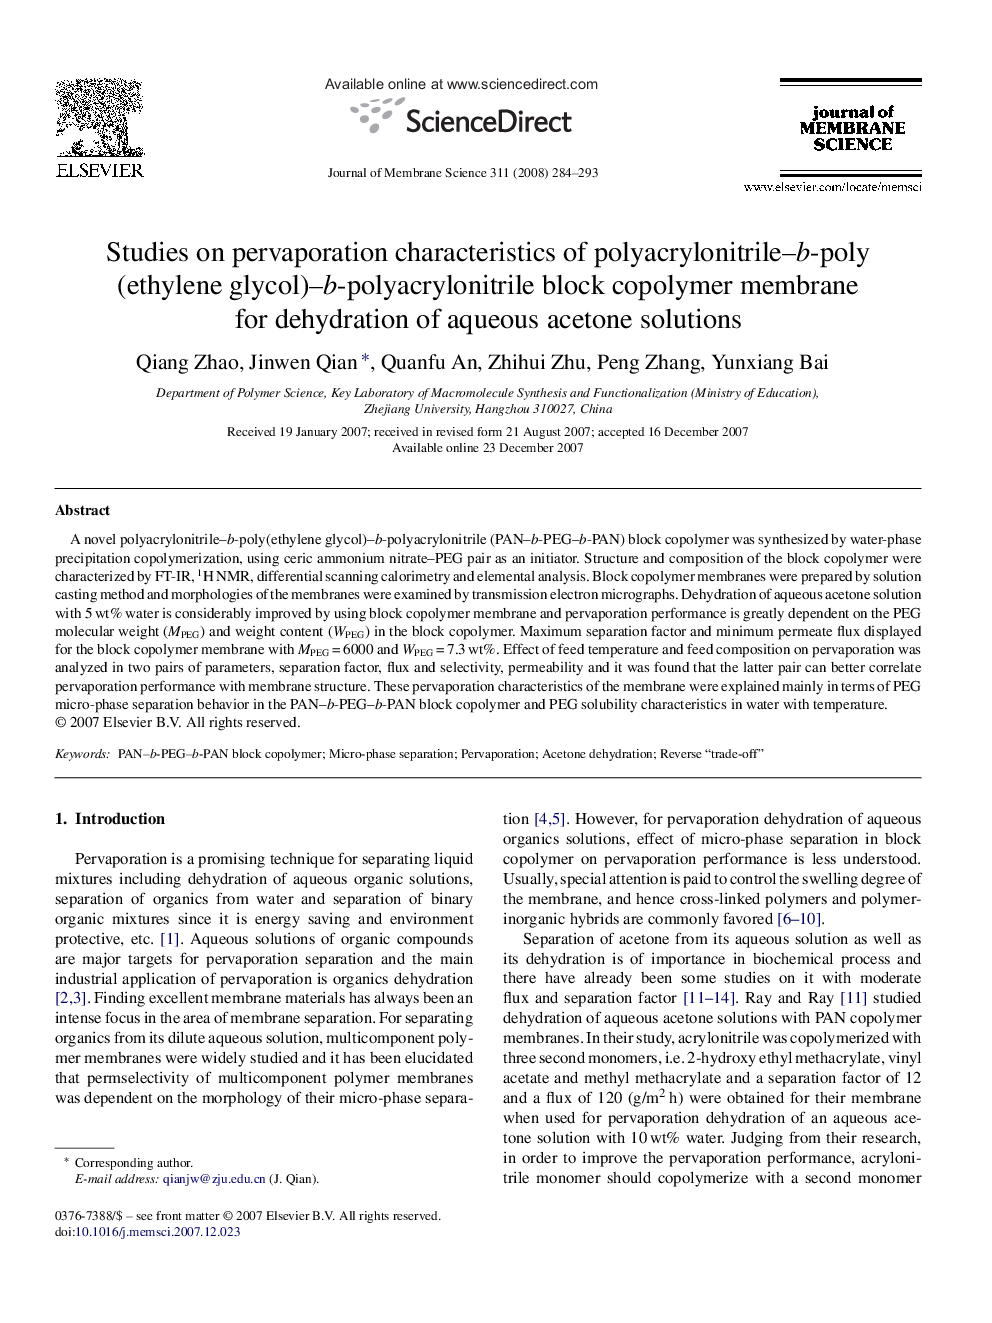 Studies on pervaporation characteristics of polyacrylonitrile–b-poly(ethylene glycol)–b-polyacrylonitrile block copolymer membrane for dehydration of aqueous acetone solutions